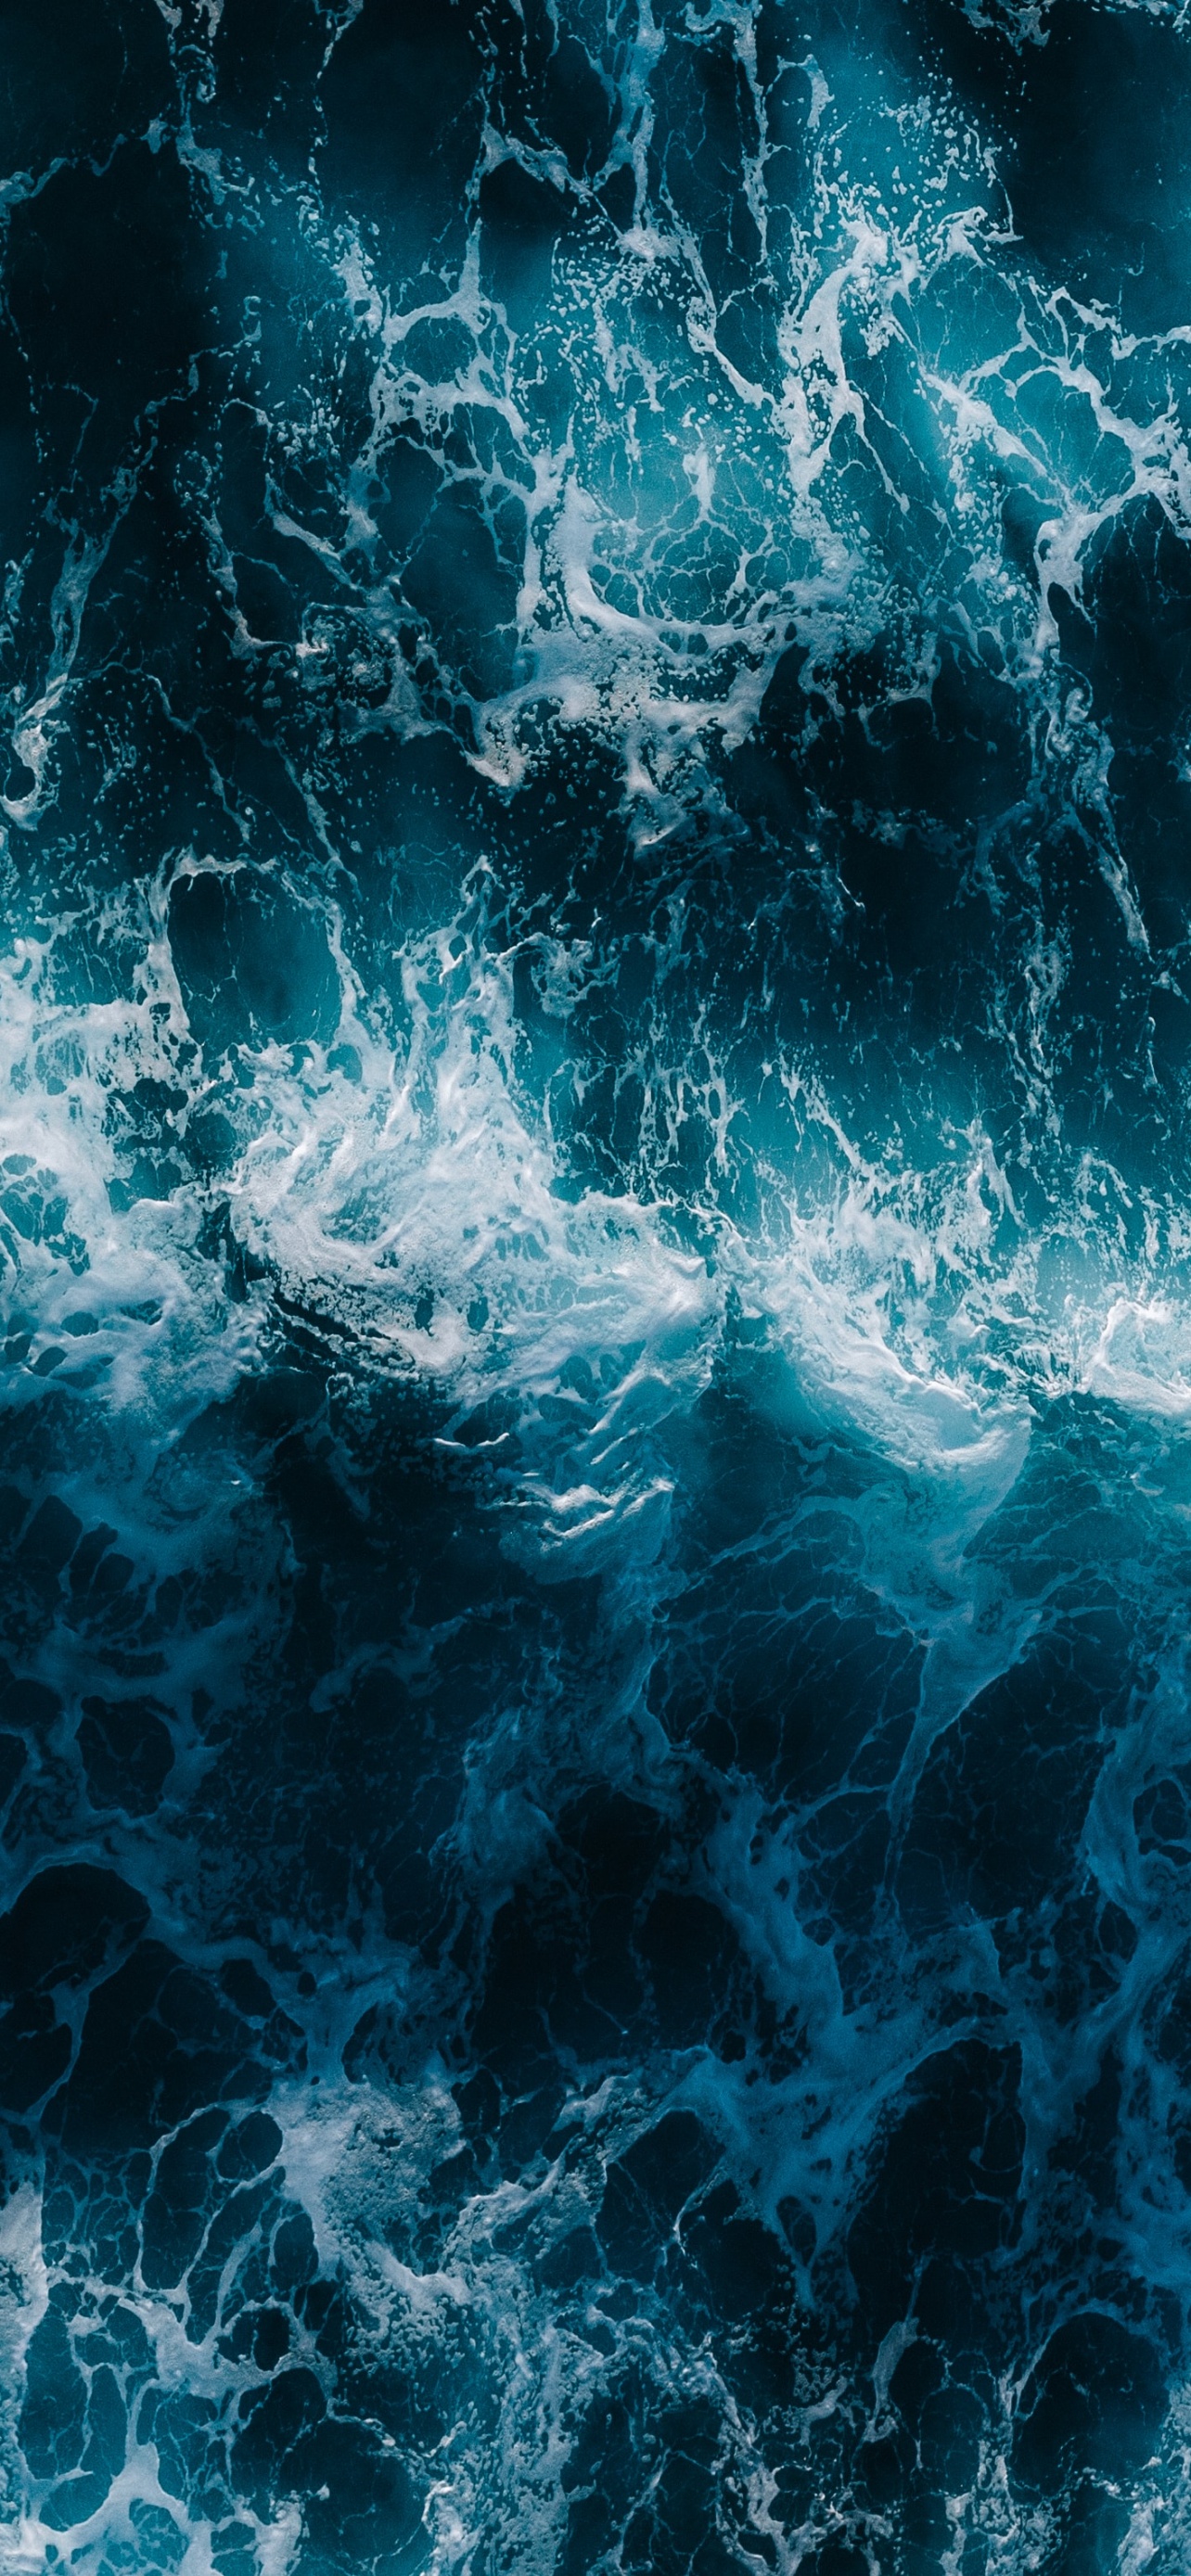 Ocean Waves Wallpaper 4K, Aerial view, Blue Water, Nature, #4605